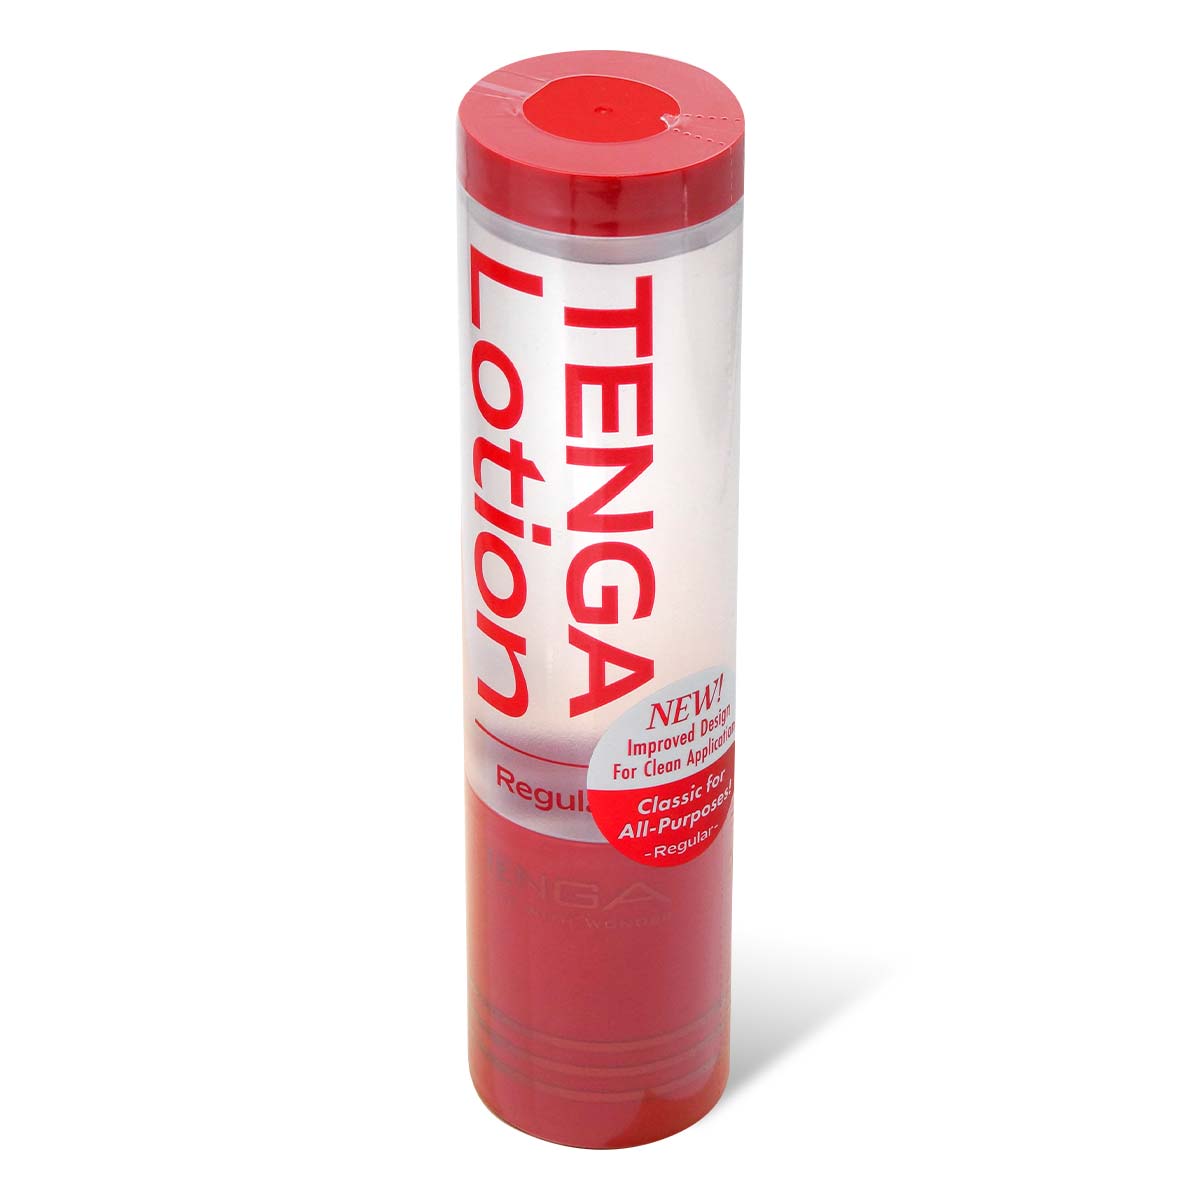 TENGA LOTION REGULAR 170ml Water-based Lubricant-p_1